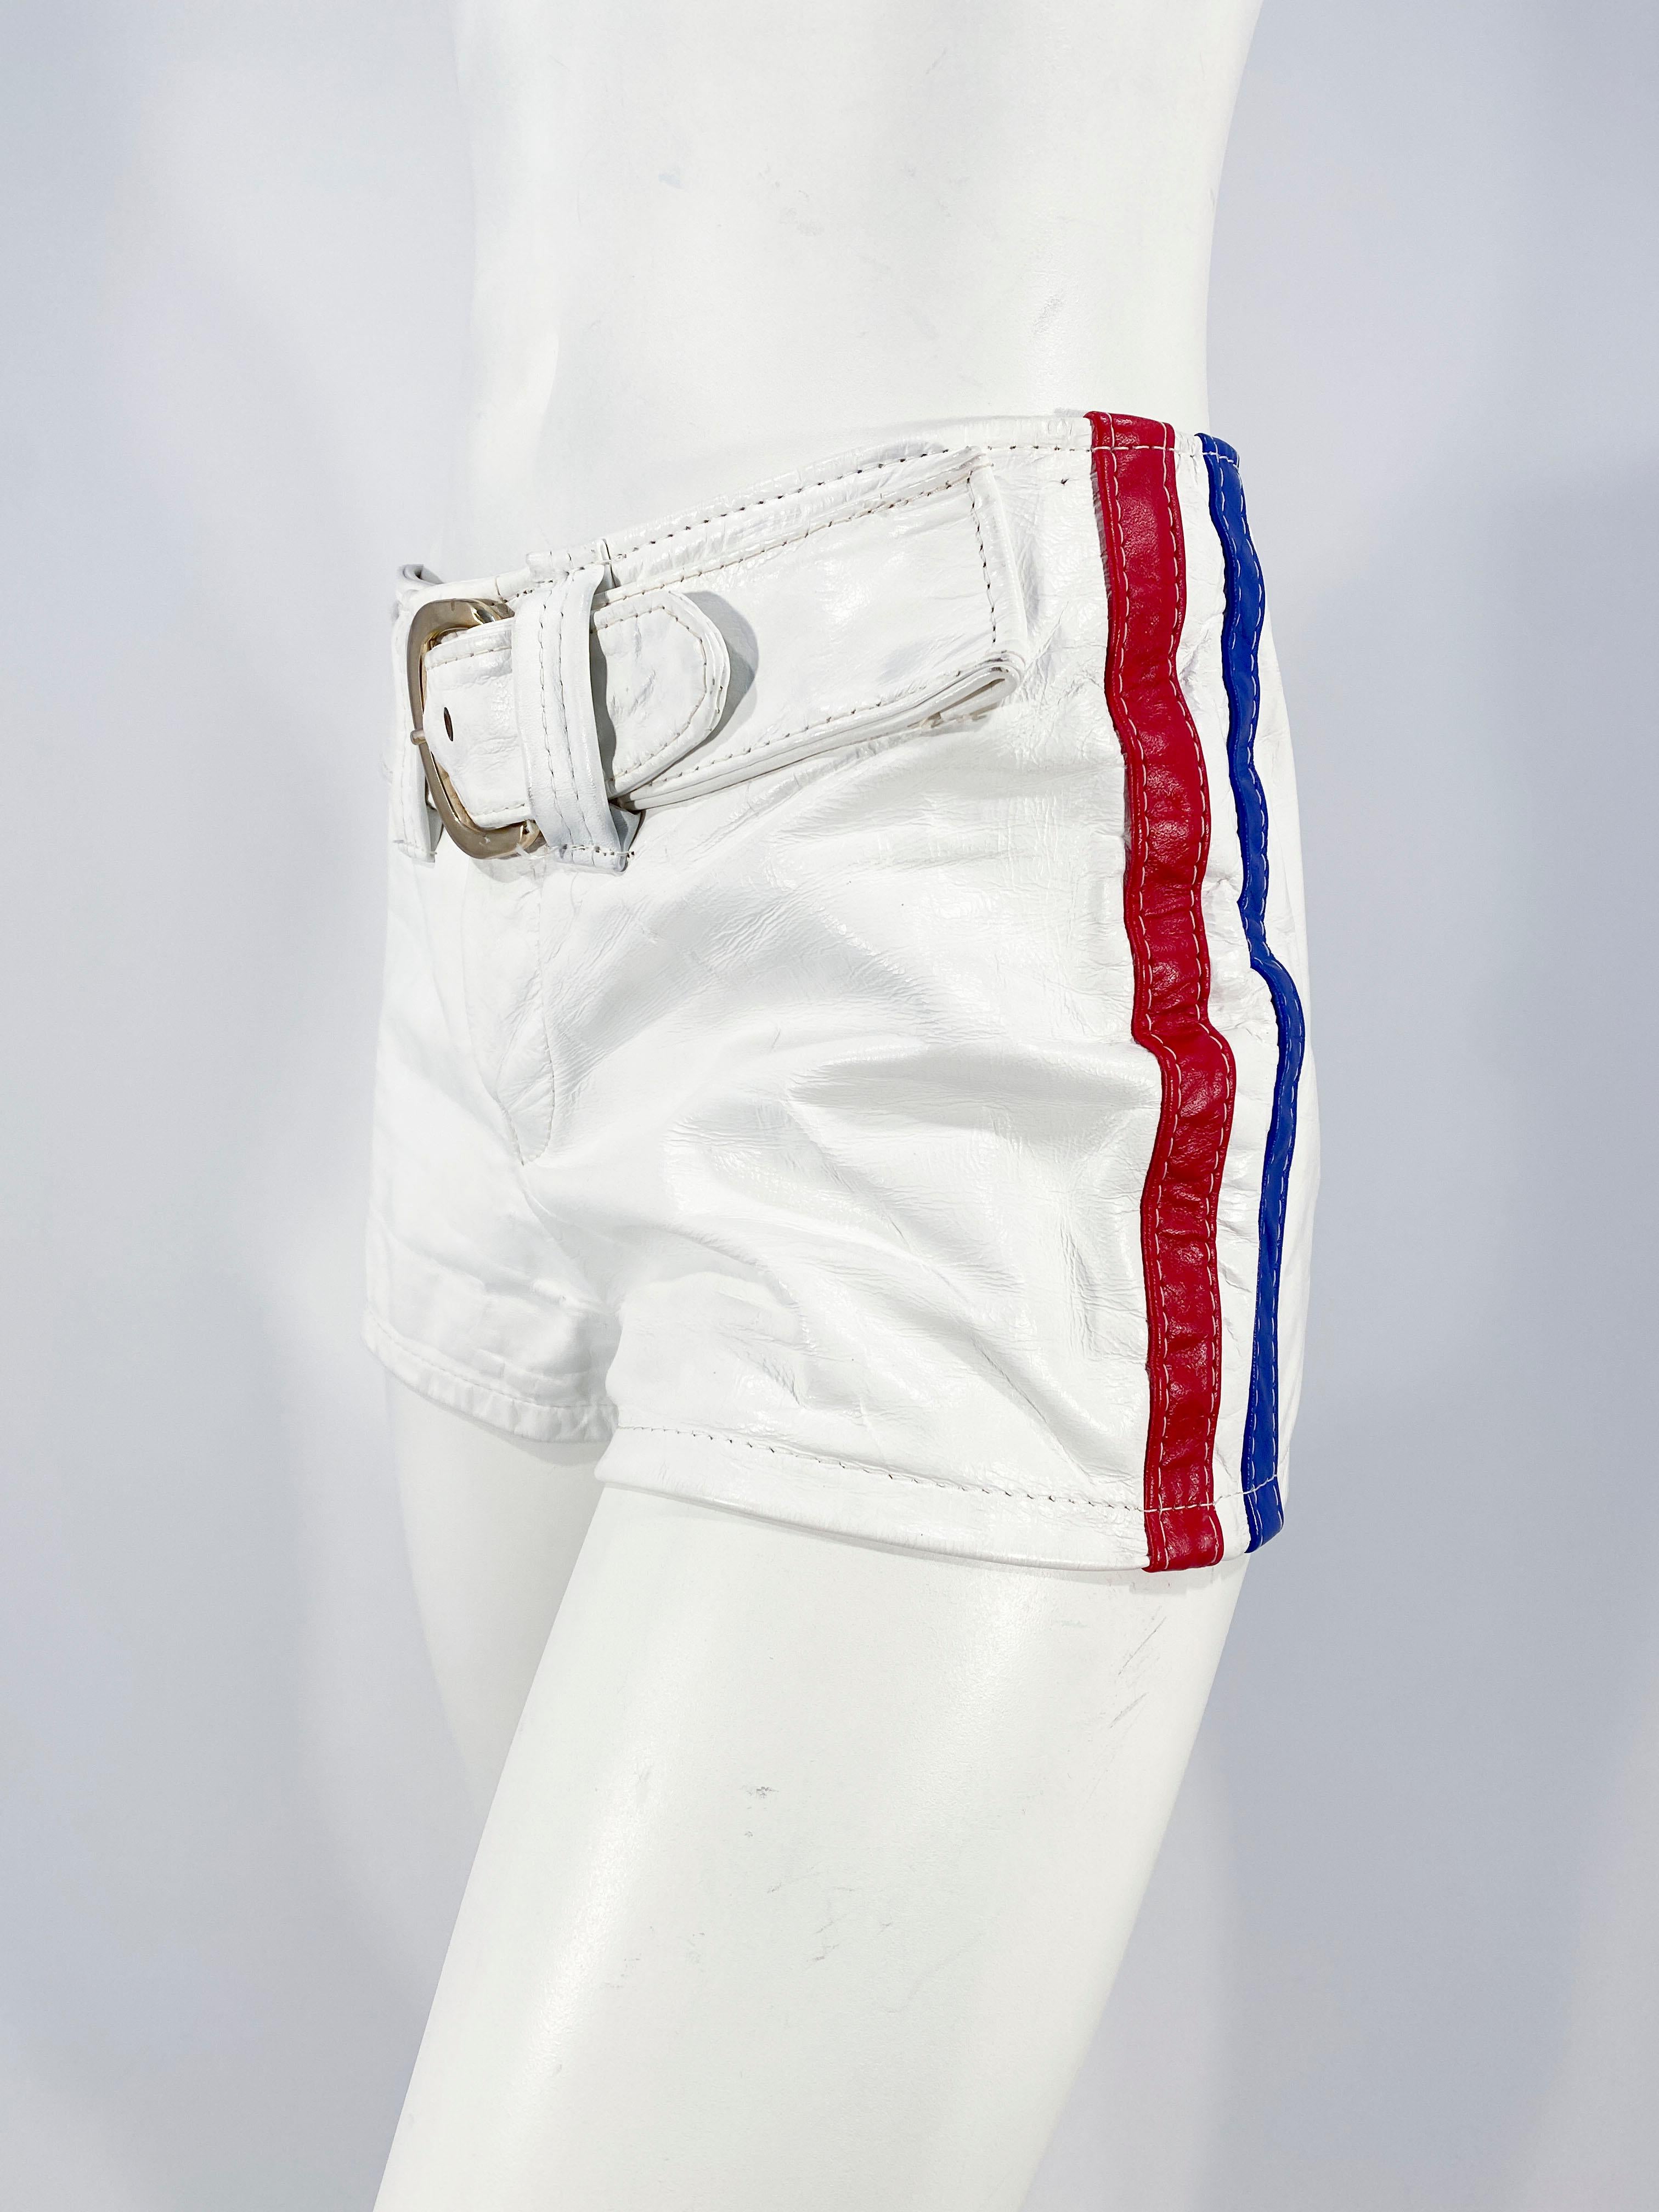 Gray 1960s/1970s White Leather Go-go Shorts